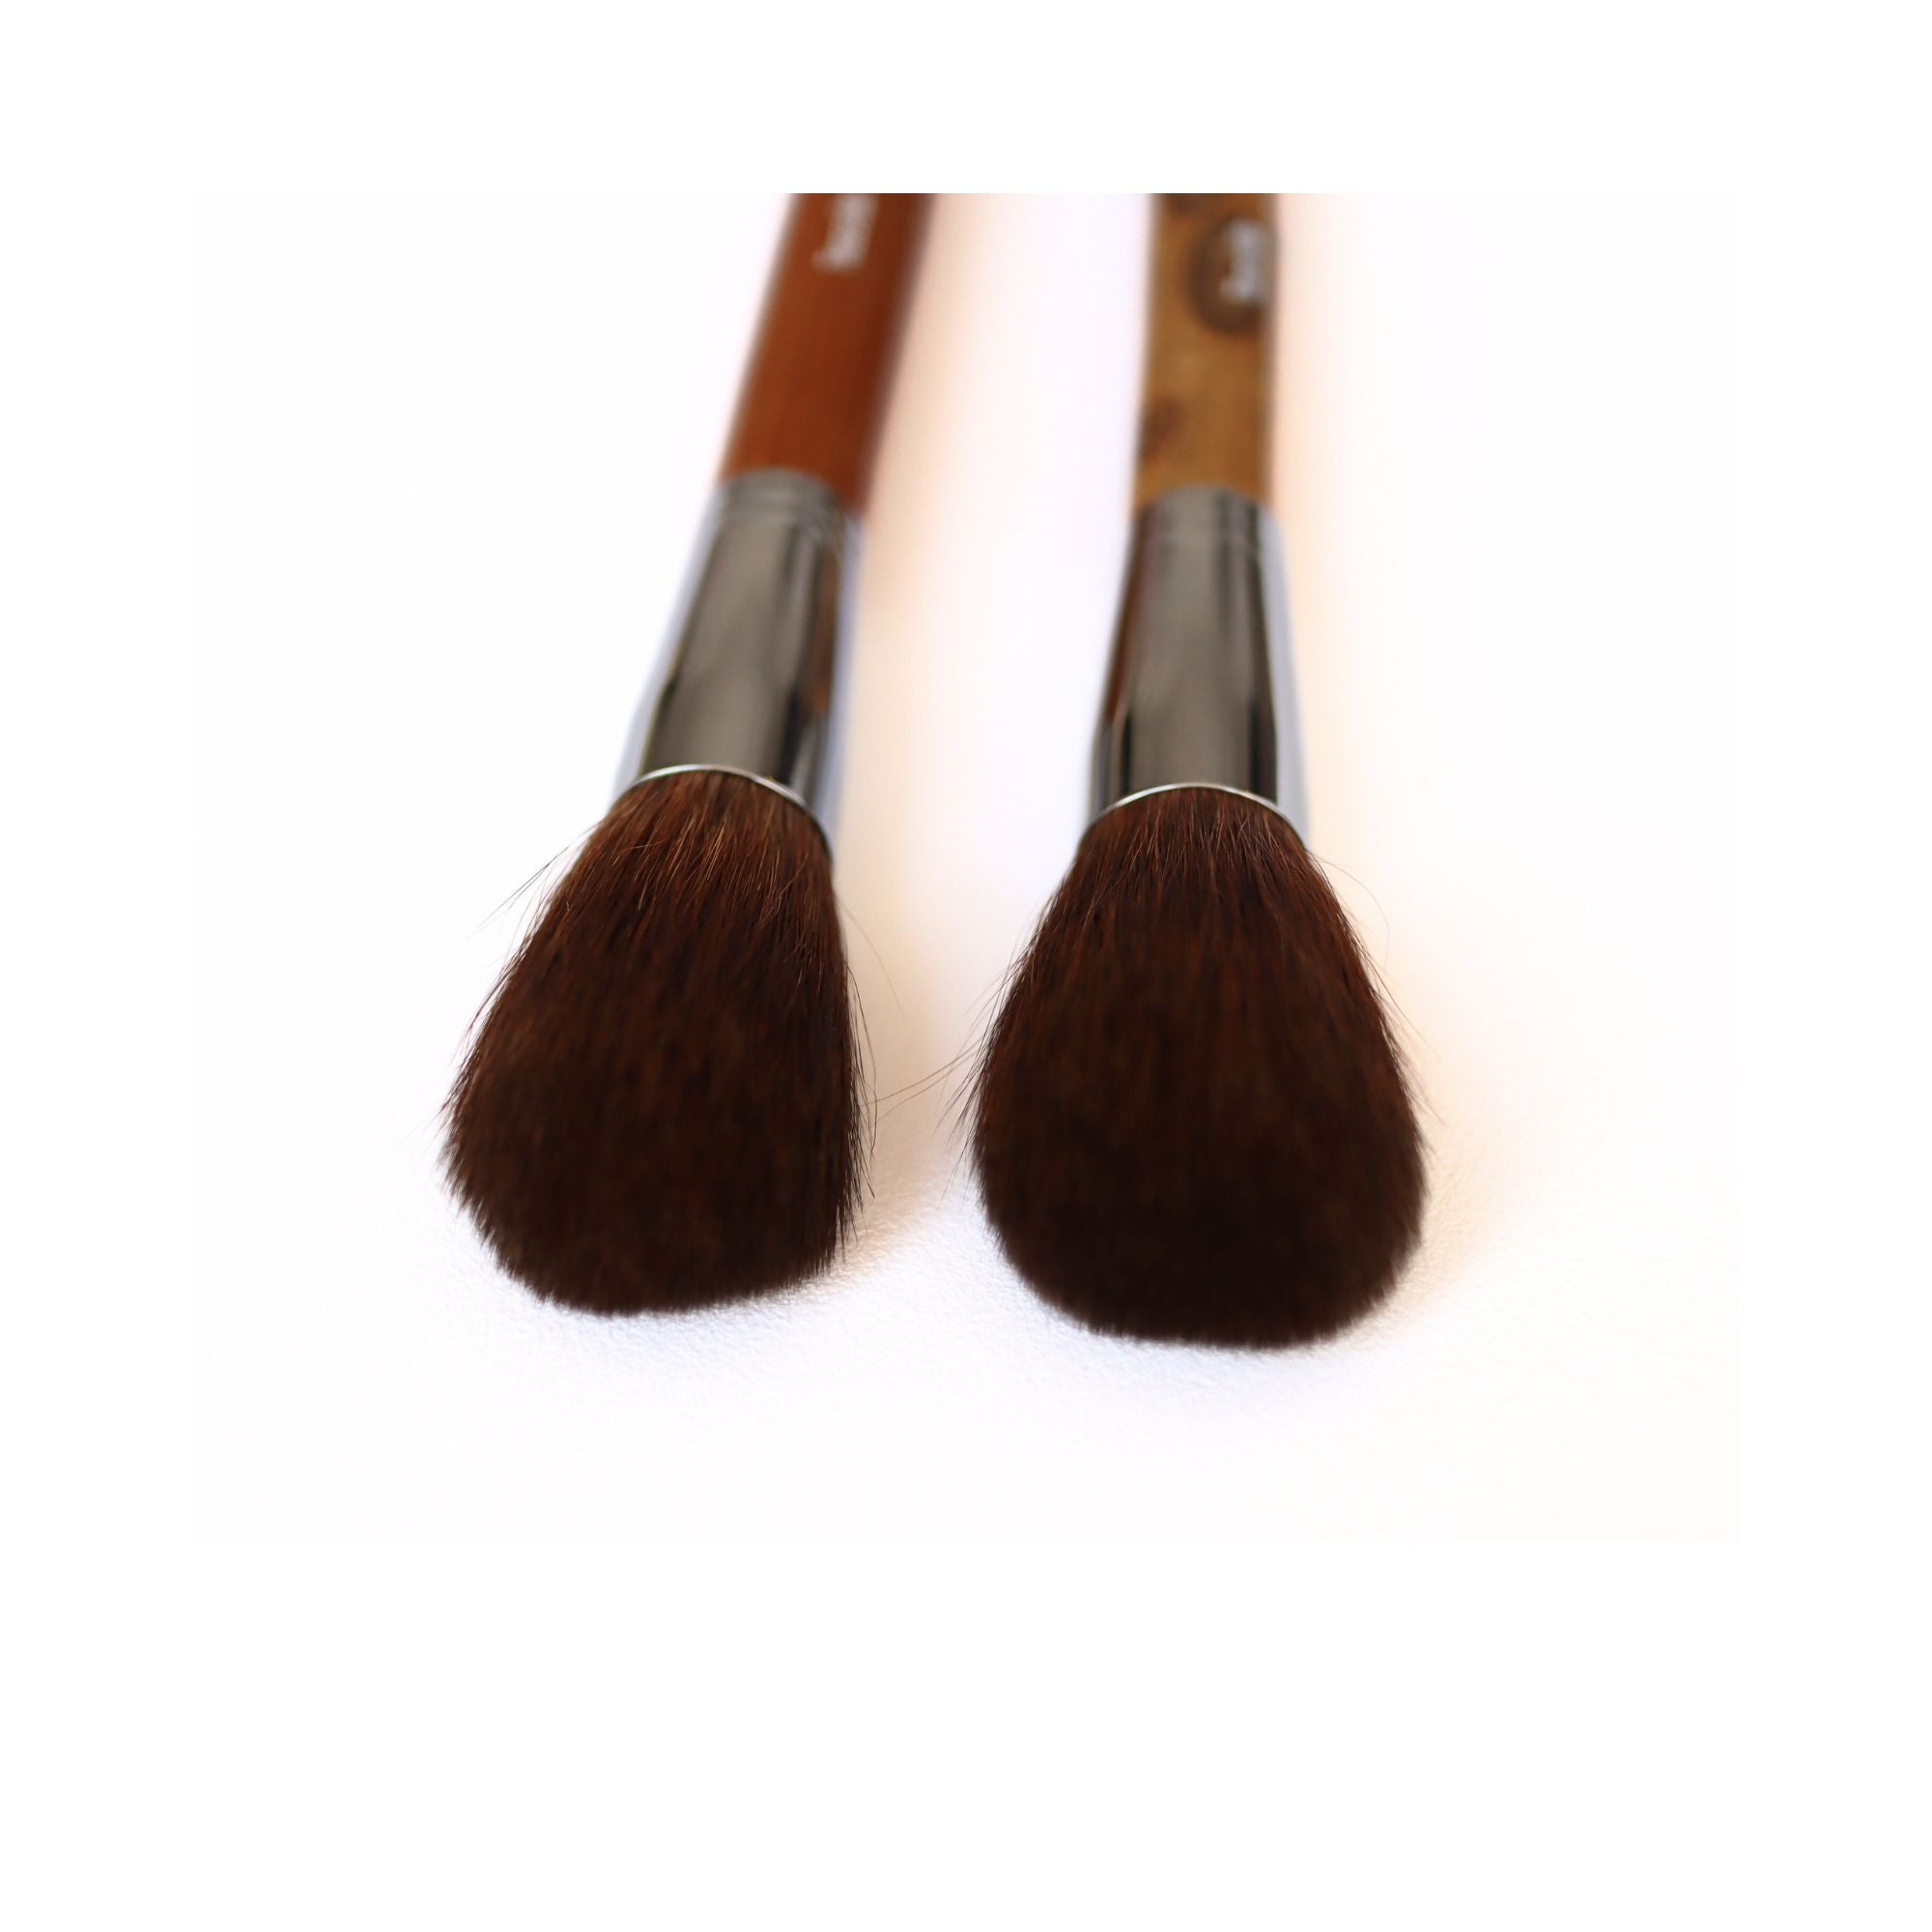 Tanseido Large Cheek Brush, Shina Take シナ竹 'Bamboo' Series (AC28TAKE) - Fude Beauty, Japanese Makeup Brushes